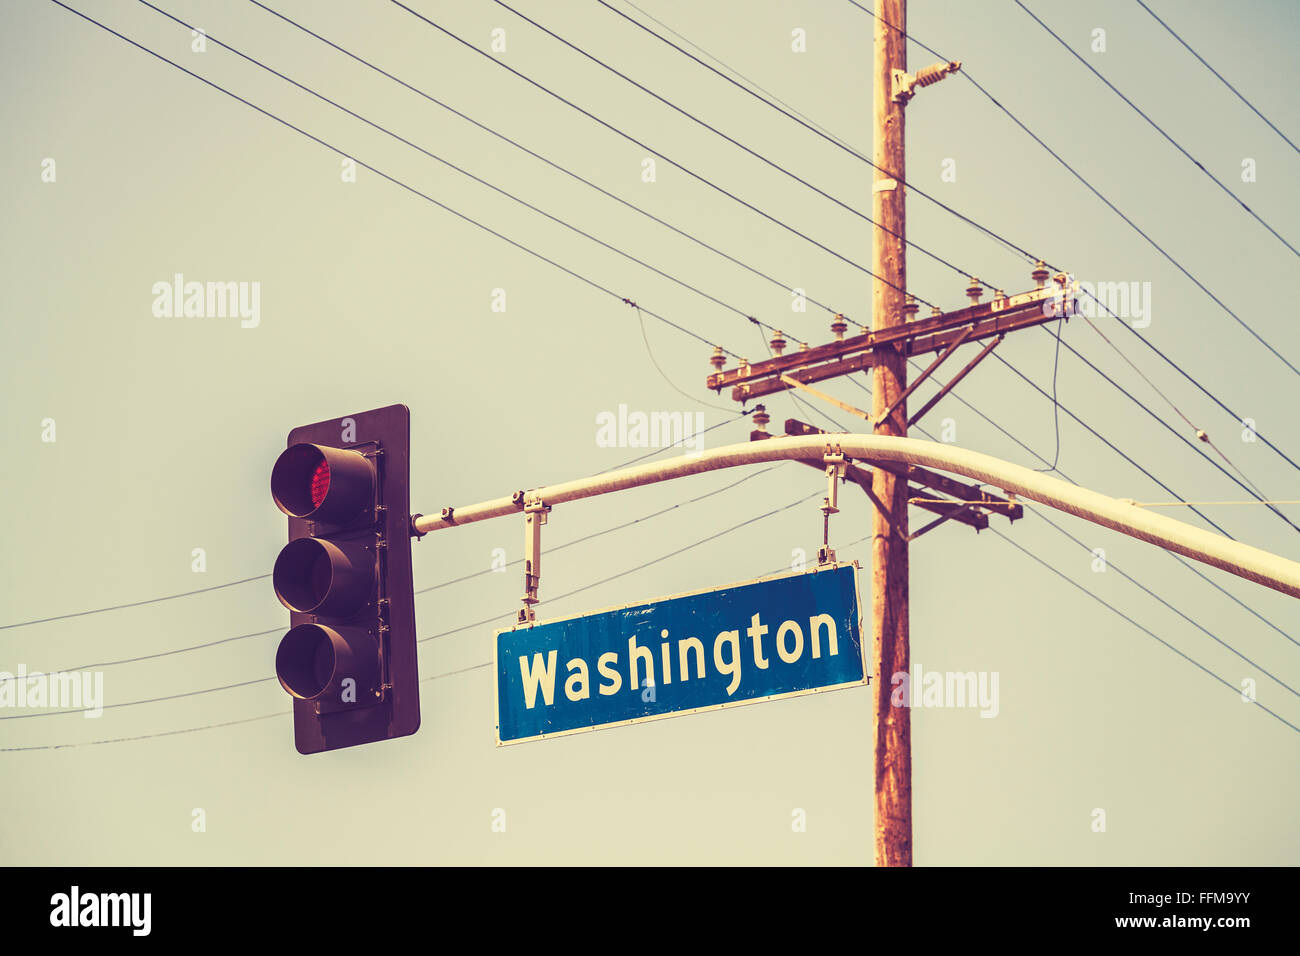 Retro stylized traffic lights and street sign, USA. Stock Photo